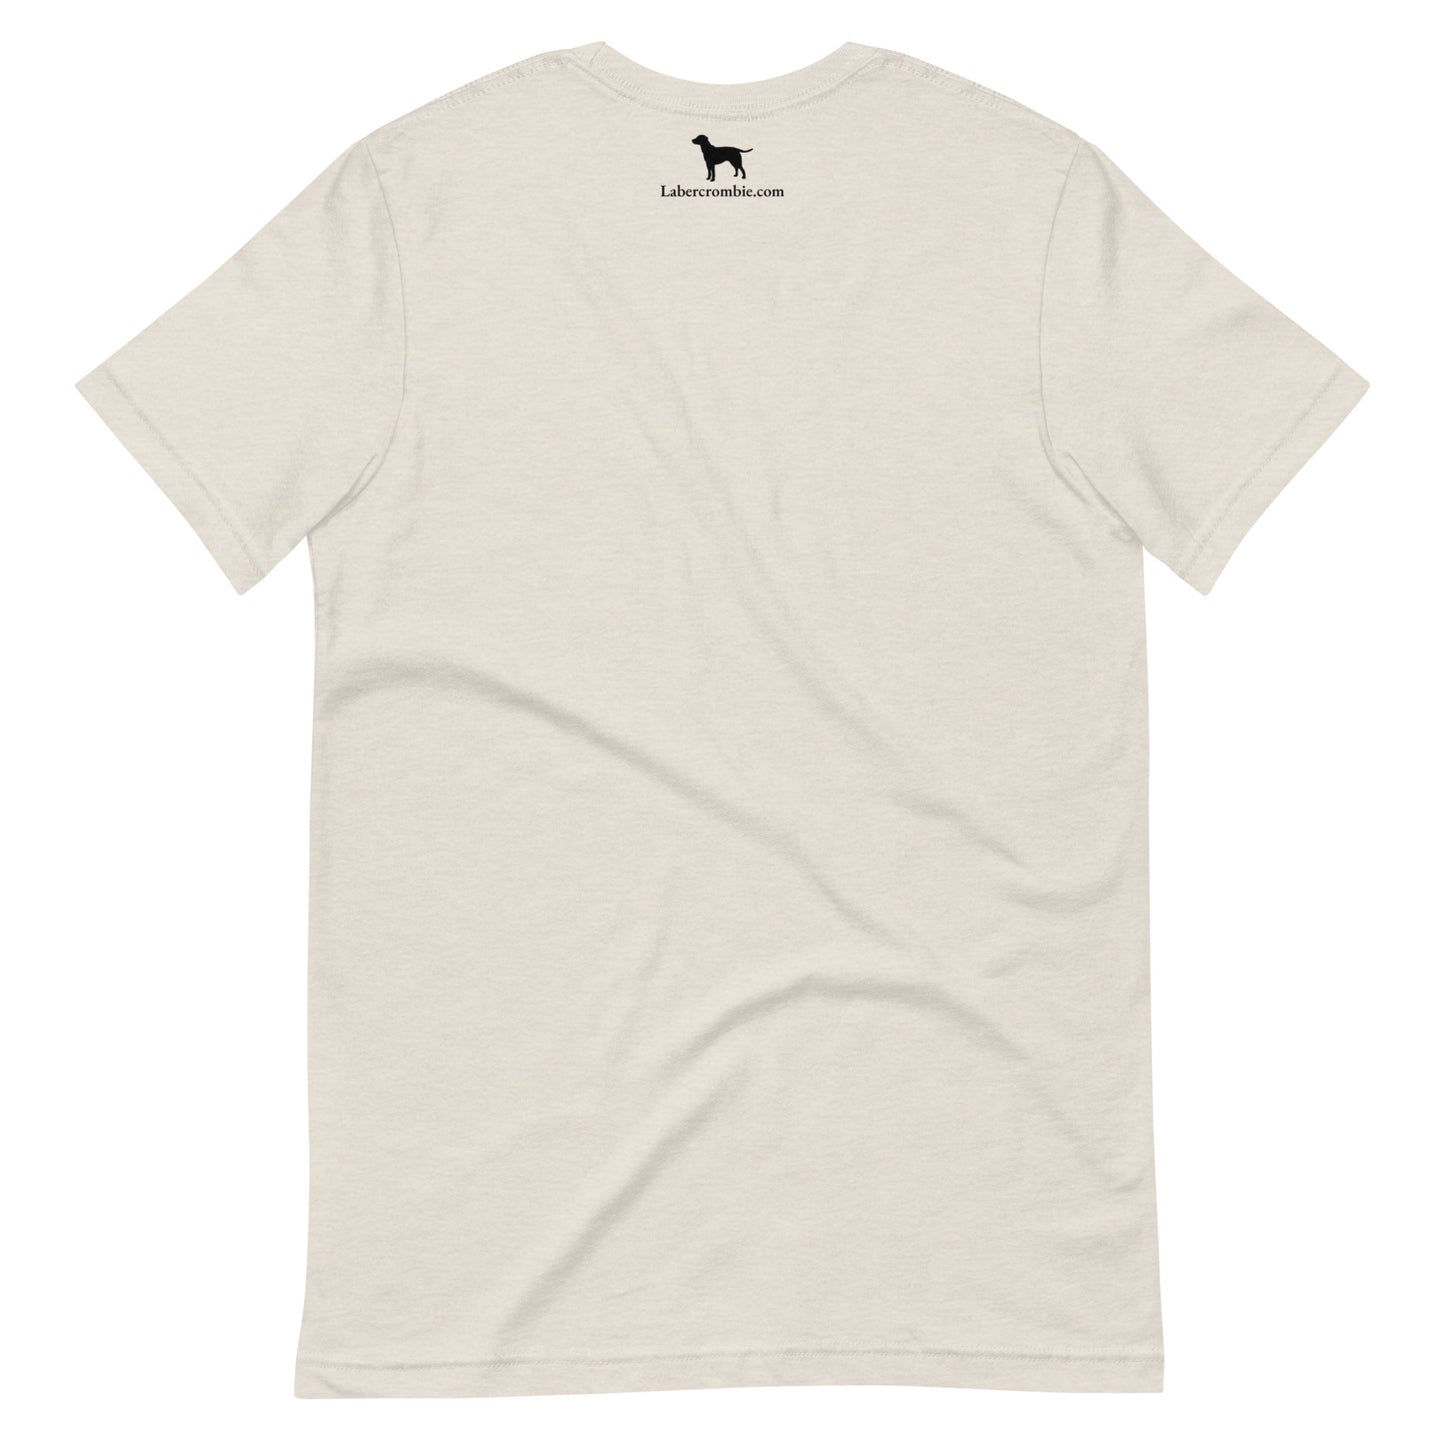 El Vaquero Perro Unisex t-shirt